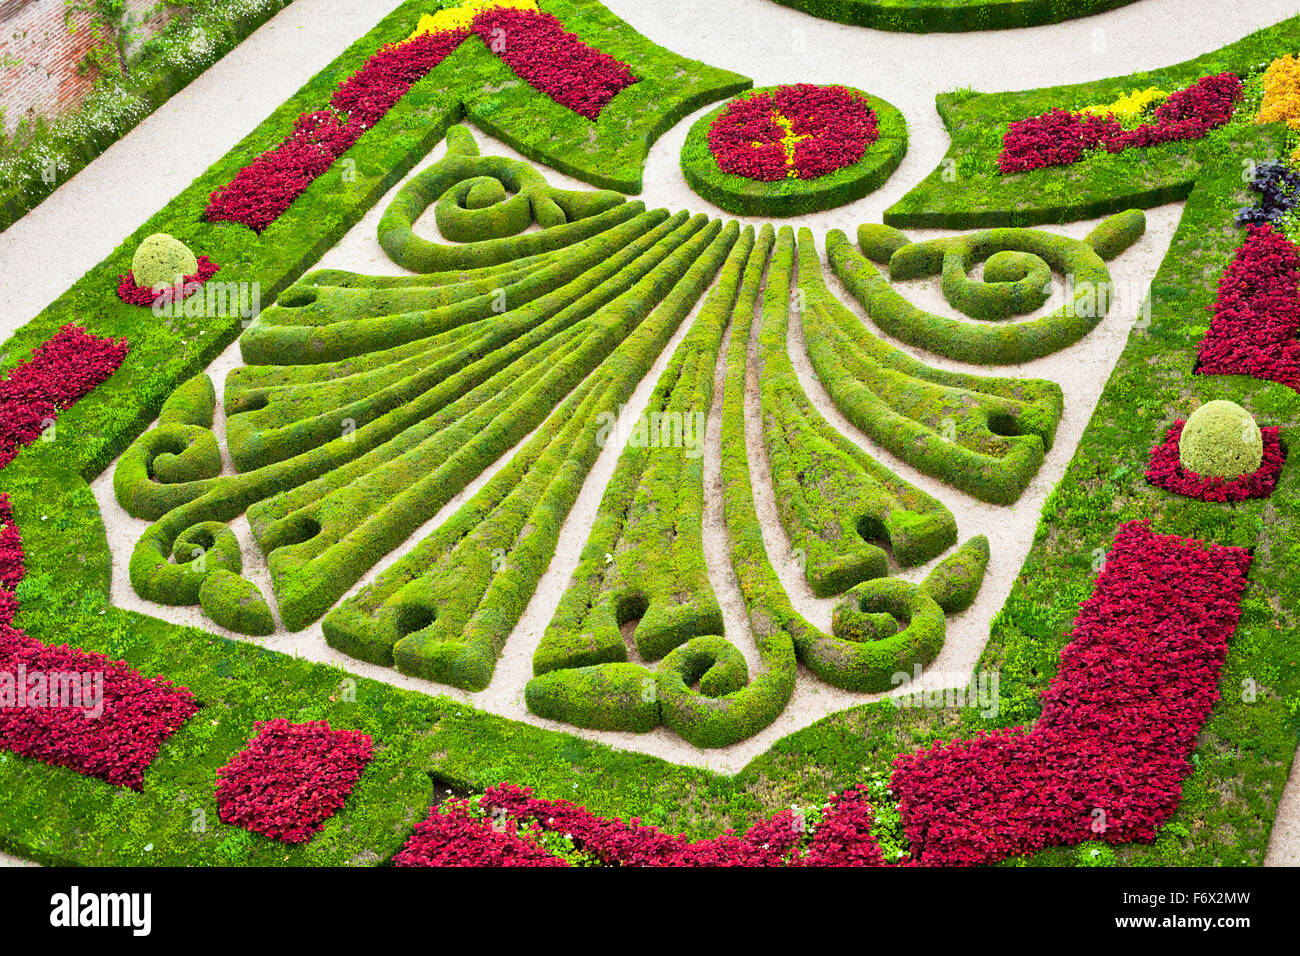 Palais de la Berbie Gardens at Albi, Tarn, France. Horizontal shot Stock Photo